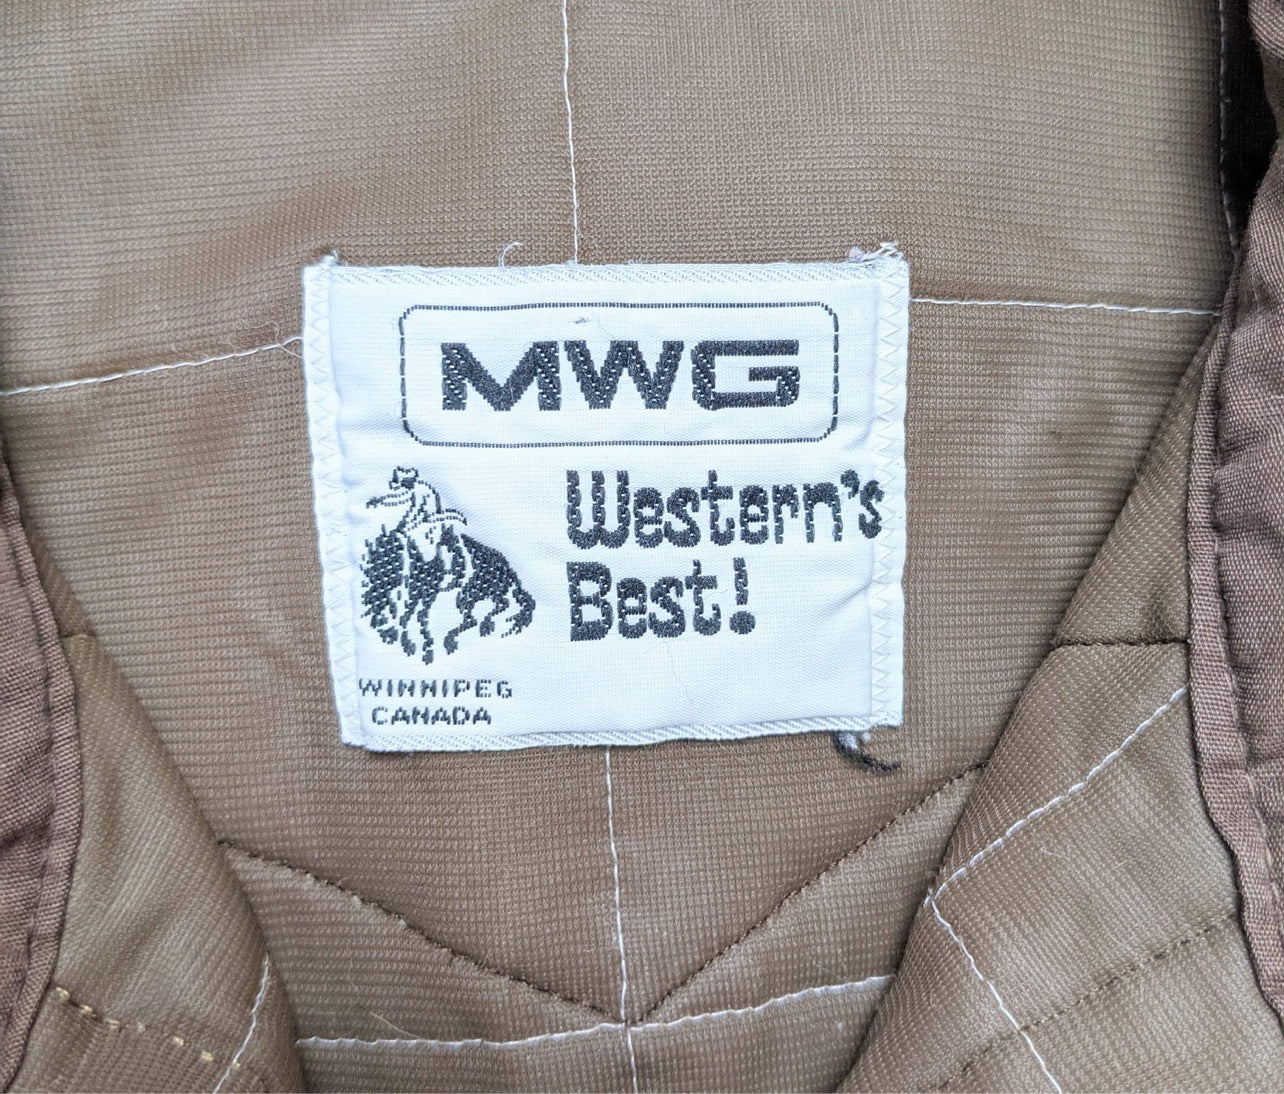 western shirt jacket overshirt quilted beige brown mens bulls 70s style vintage retro